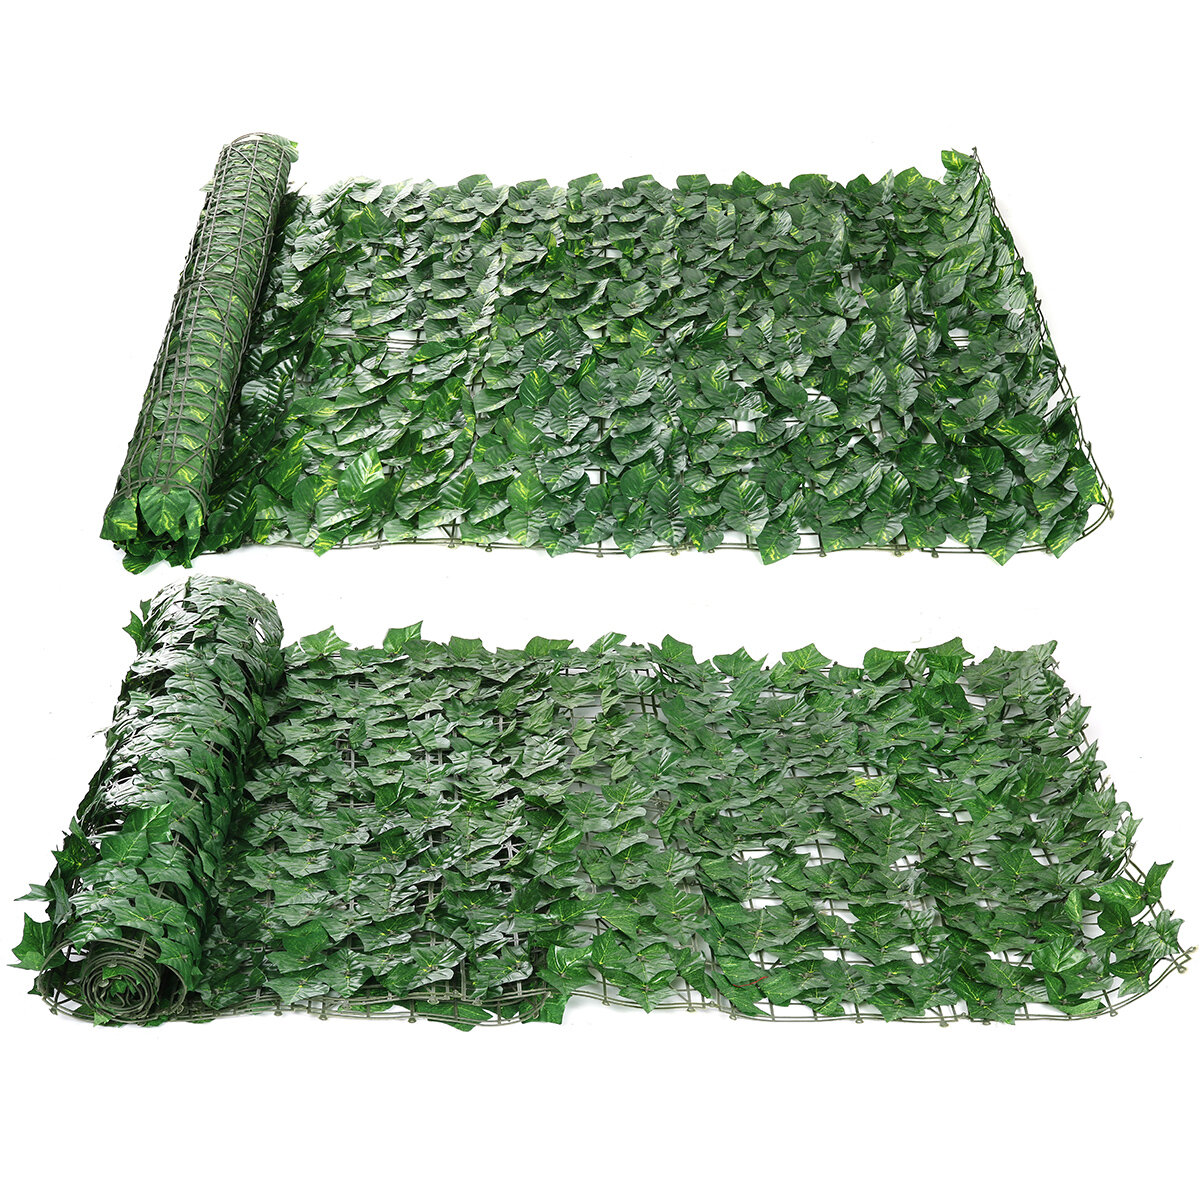 3x1M Outdoor Kunstmatige Faux Ivy Leaf Privacy Hek Scherm Decor Panelen Hedge Garden Wall Cover